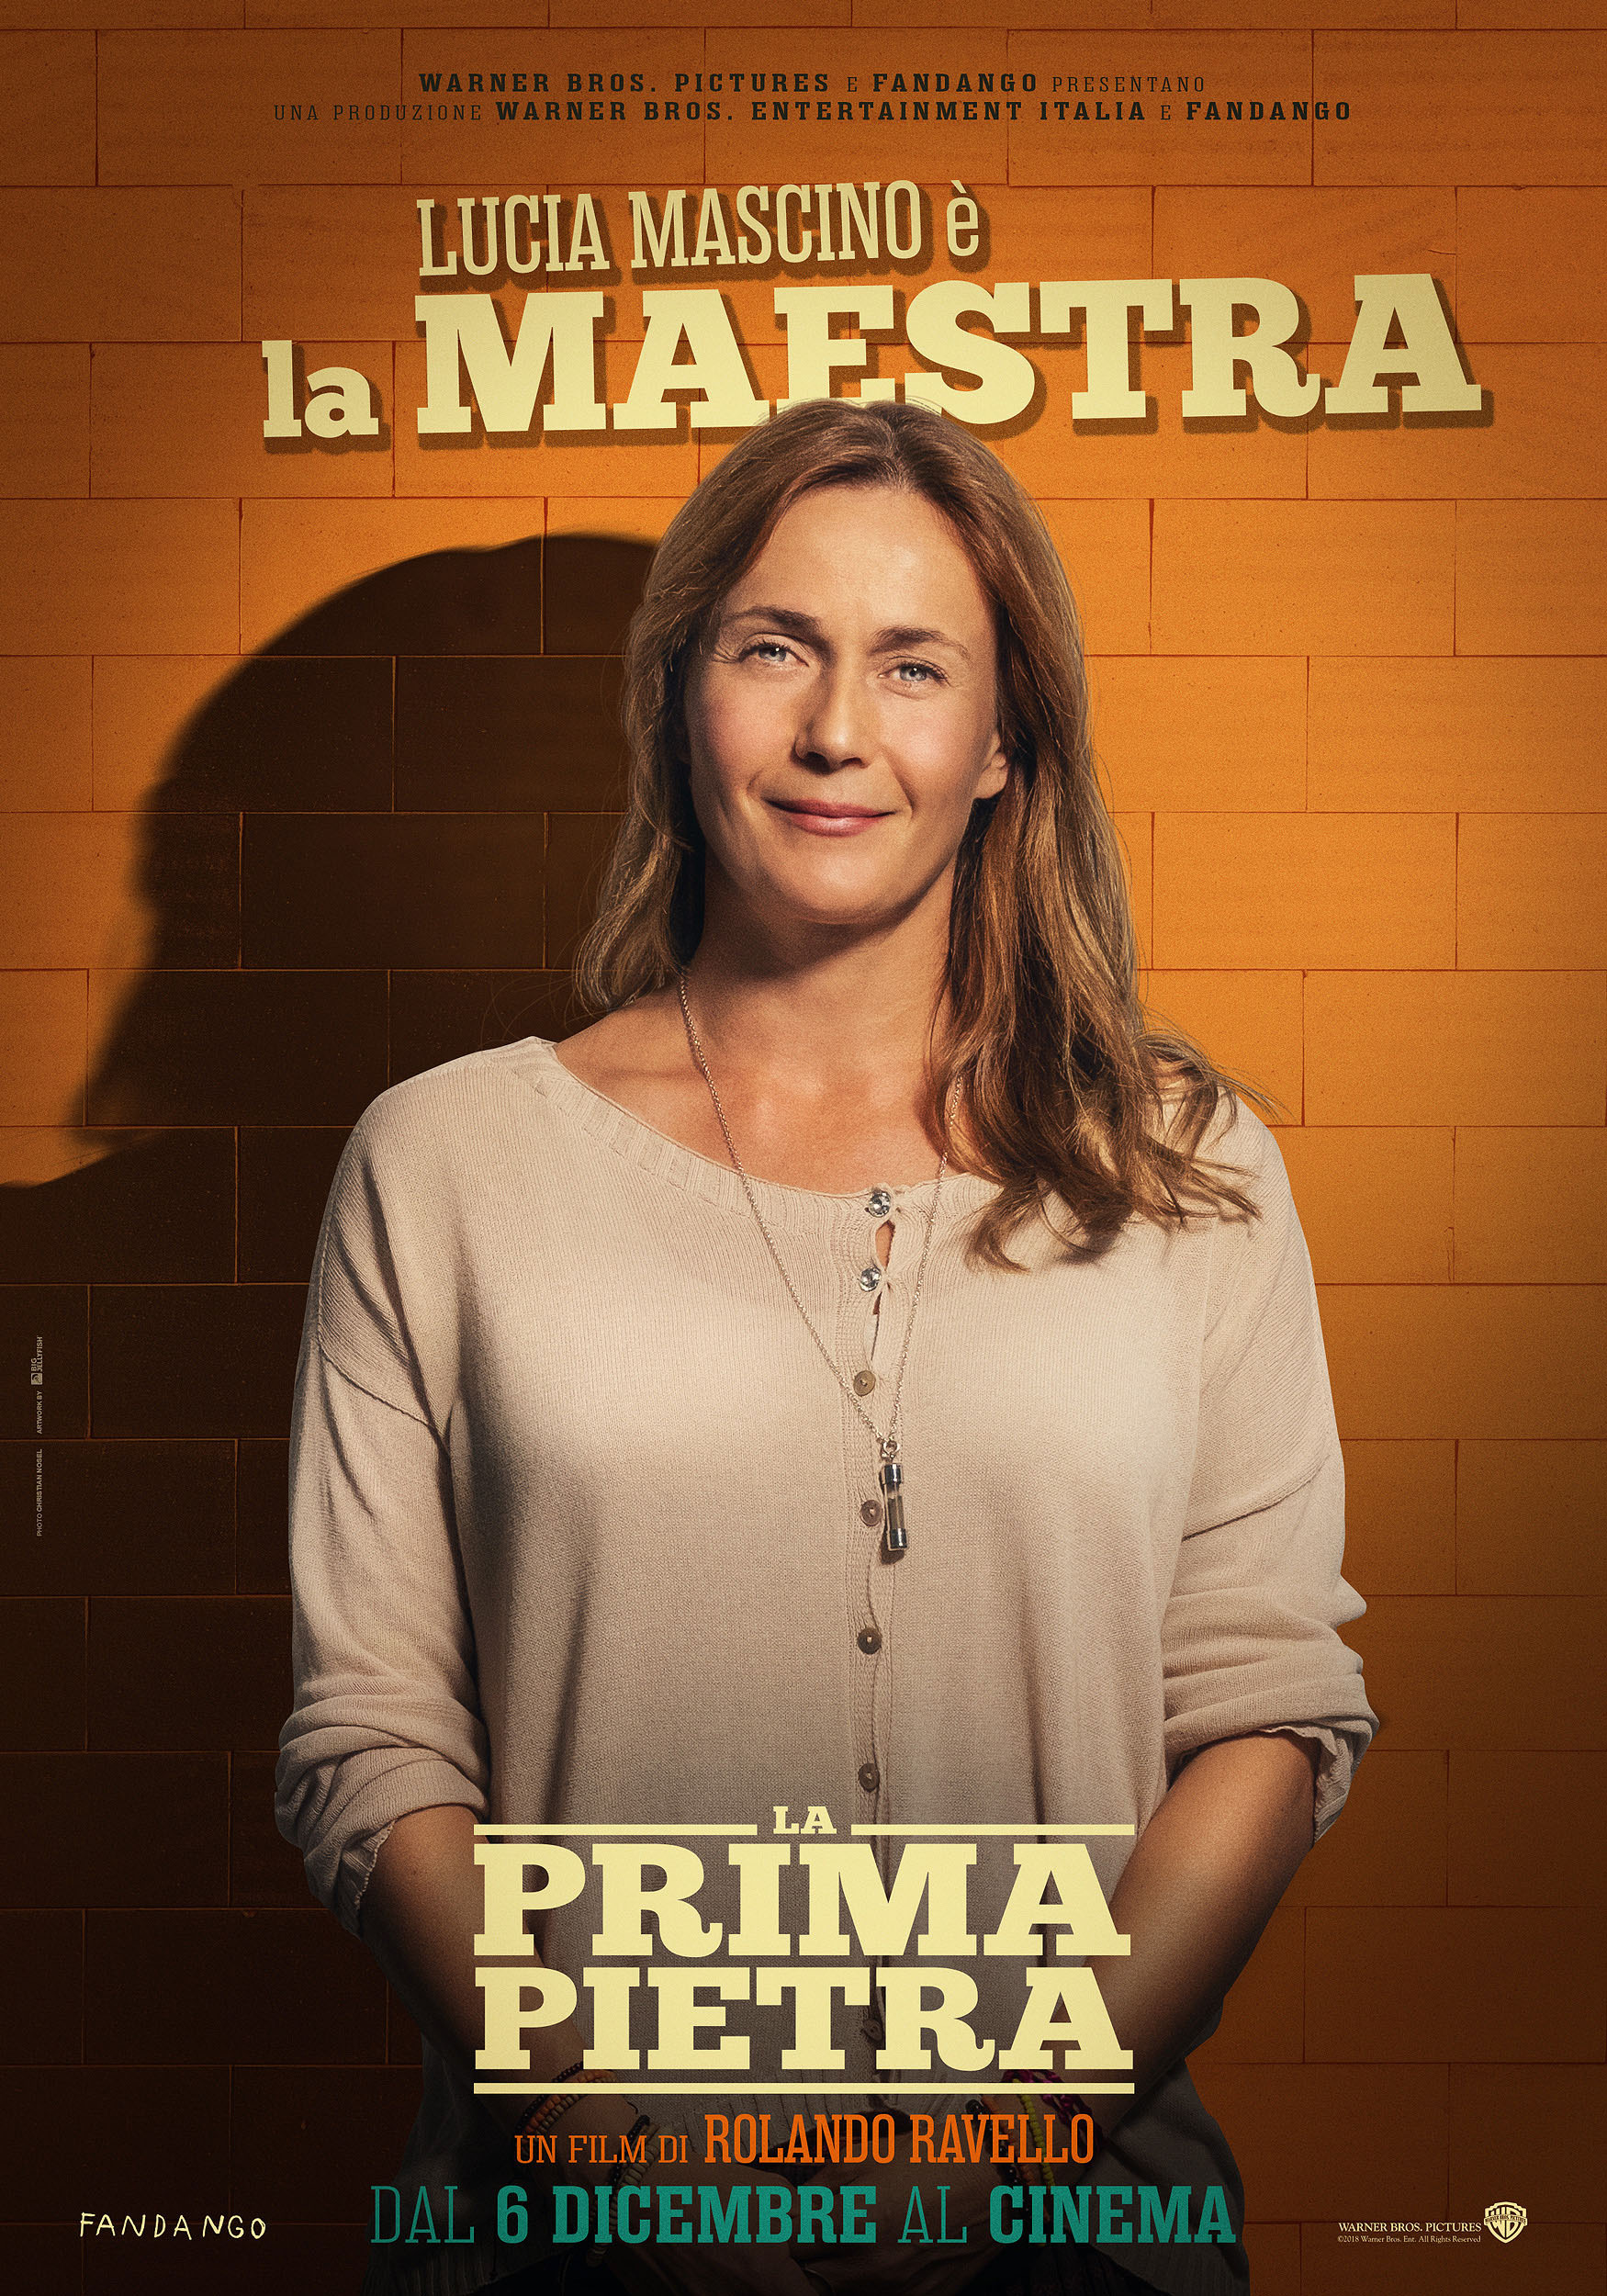 Mega Sized Movie Poster Image for La prima pietra (#7 of 8)